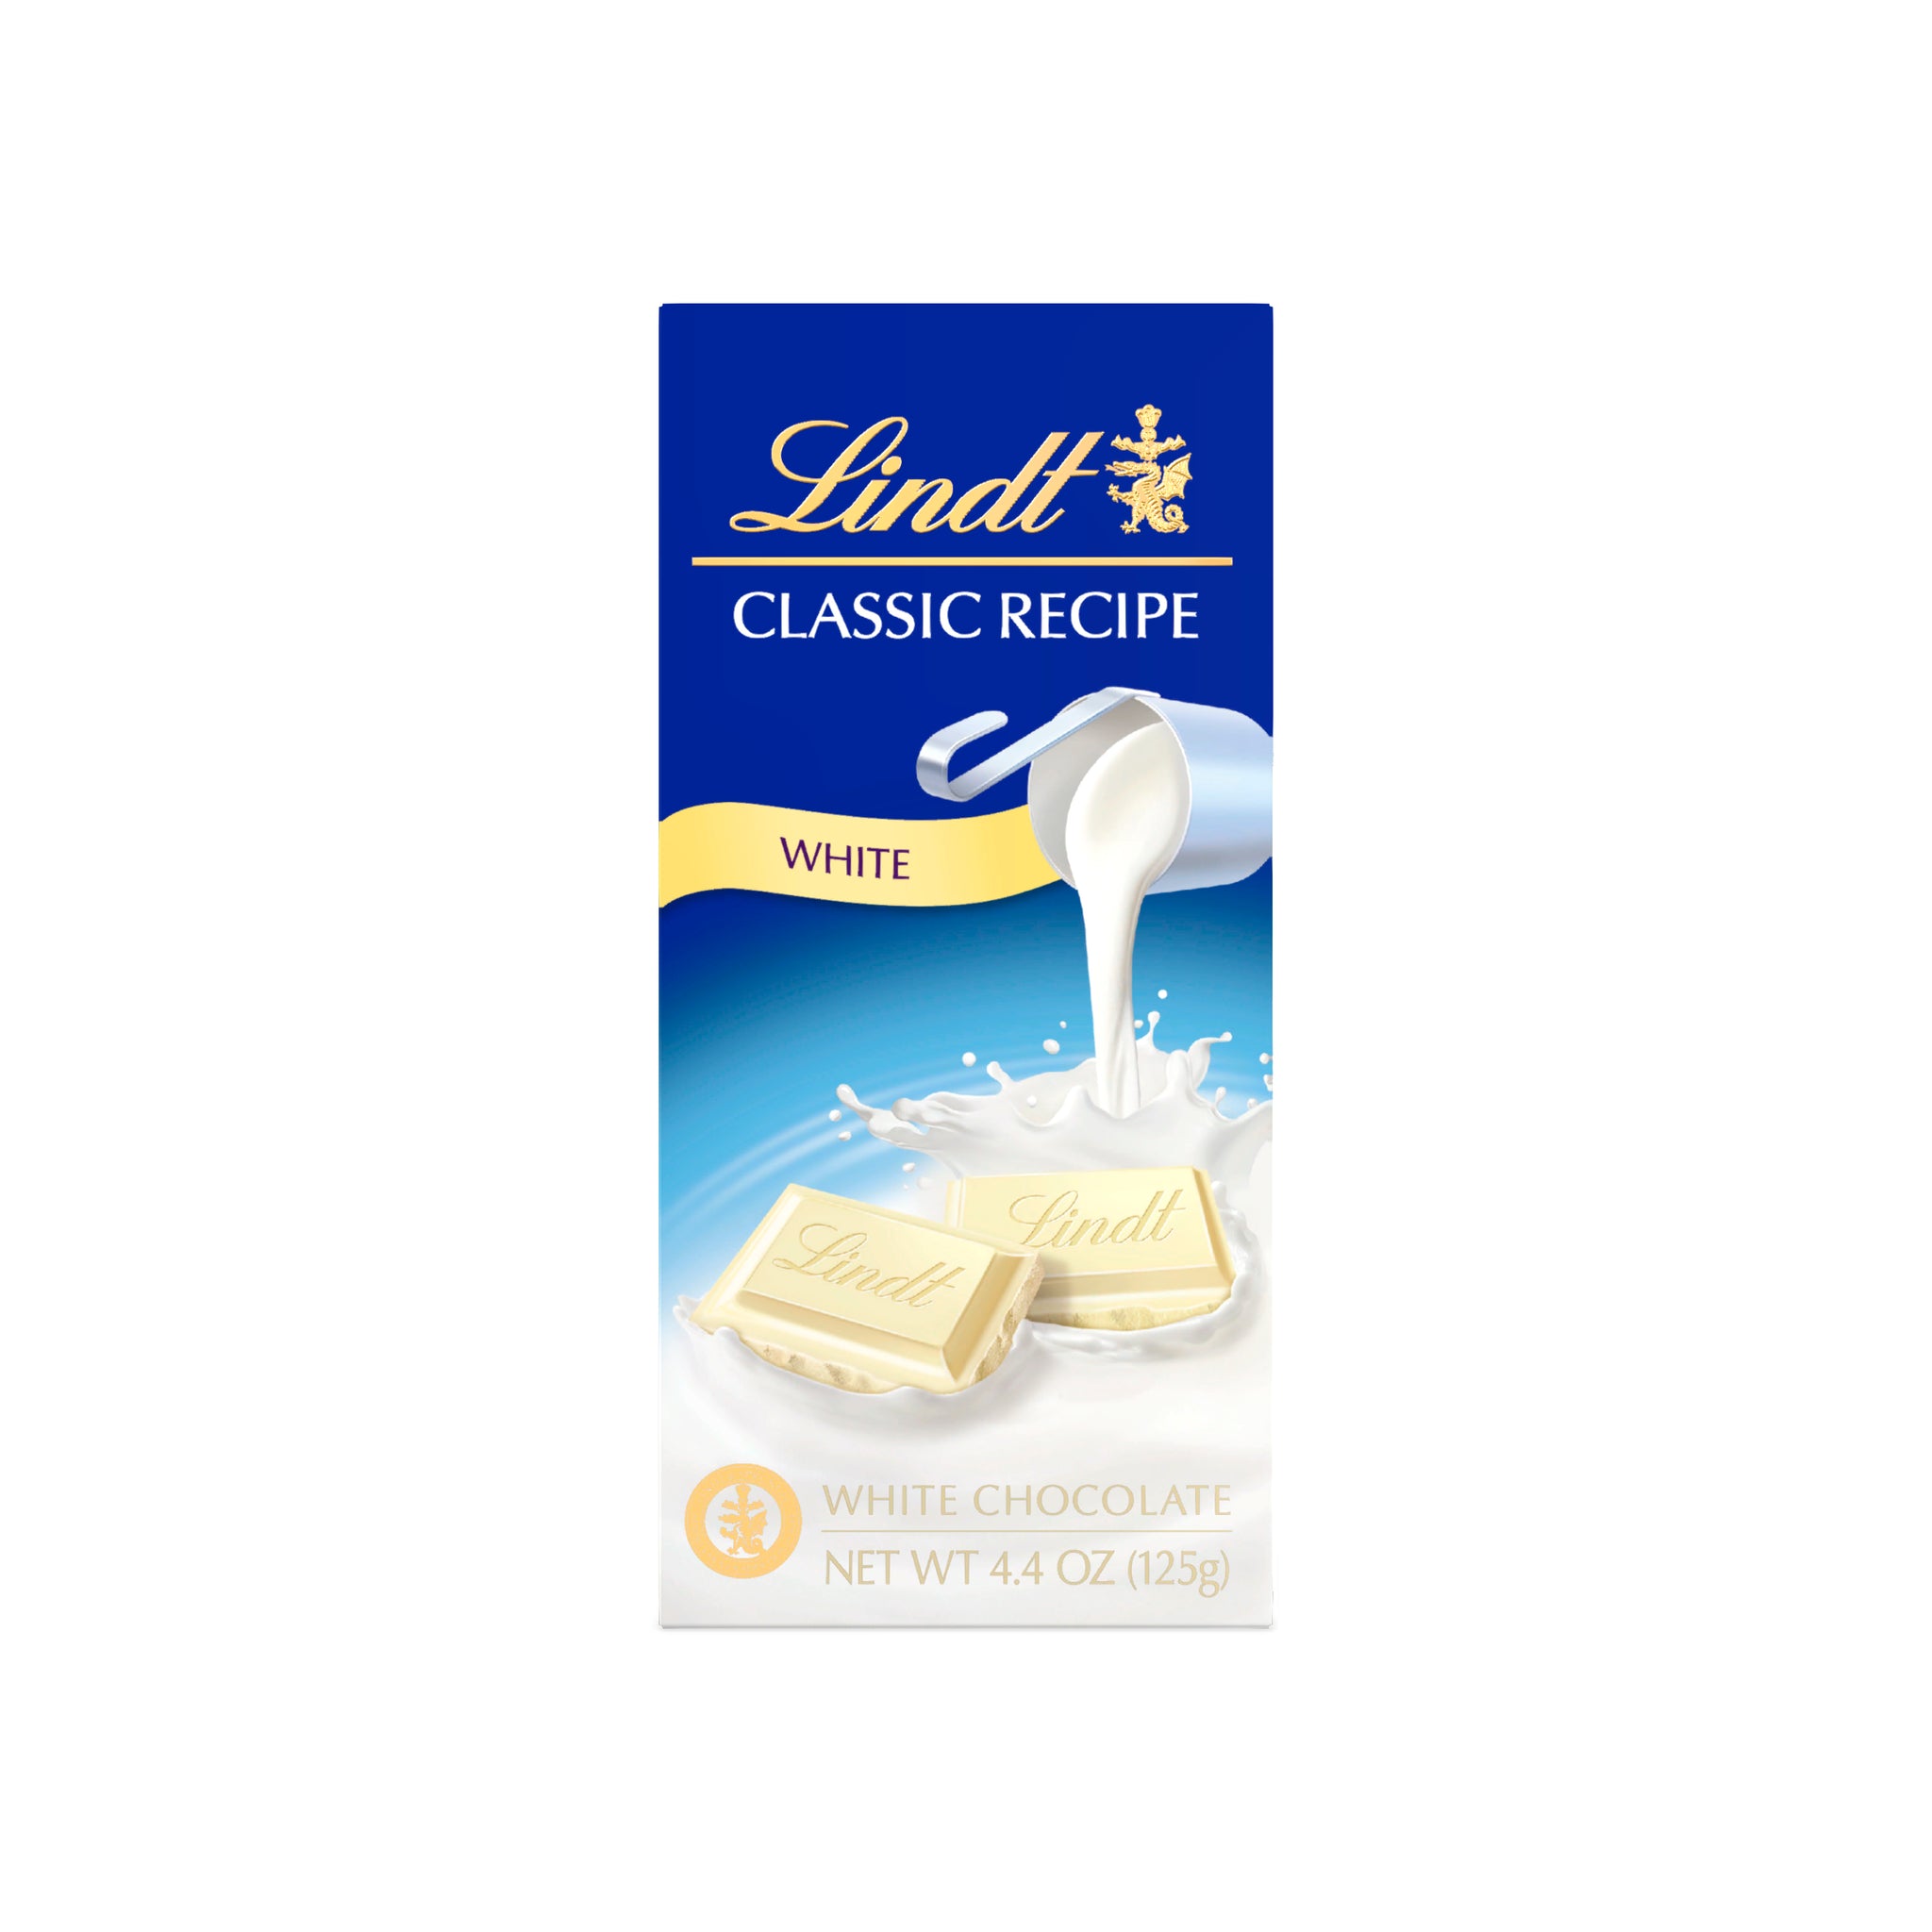 Lindt Classic Recipe White Chocolate, 4.4oz